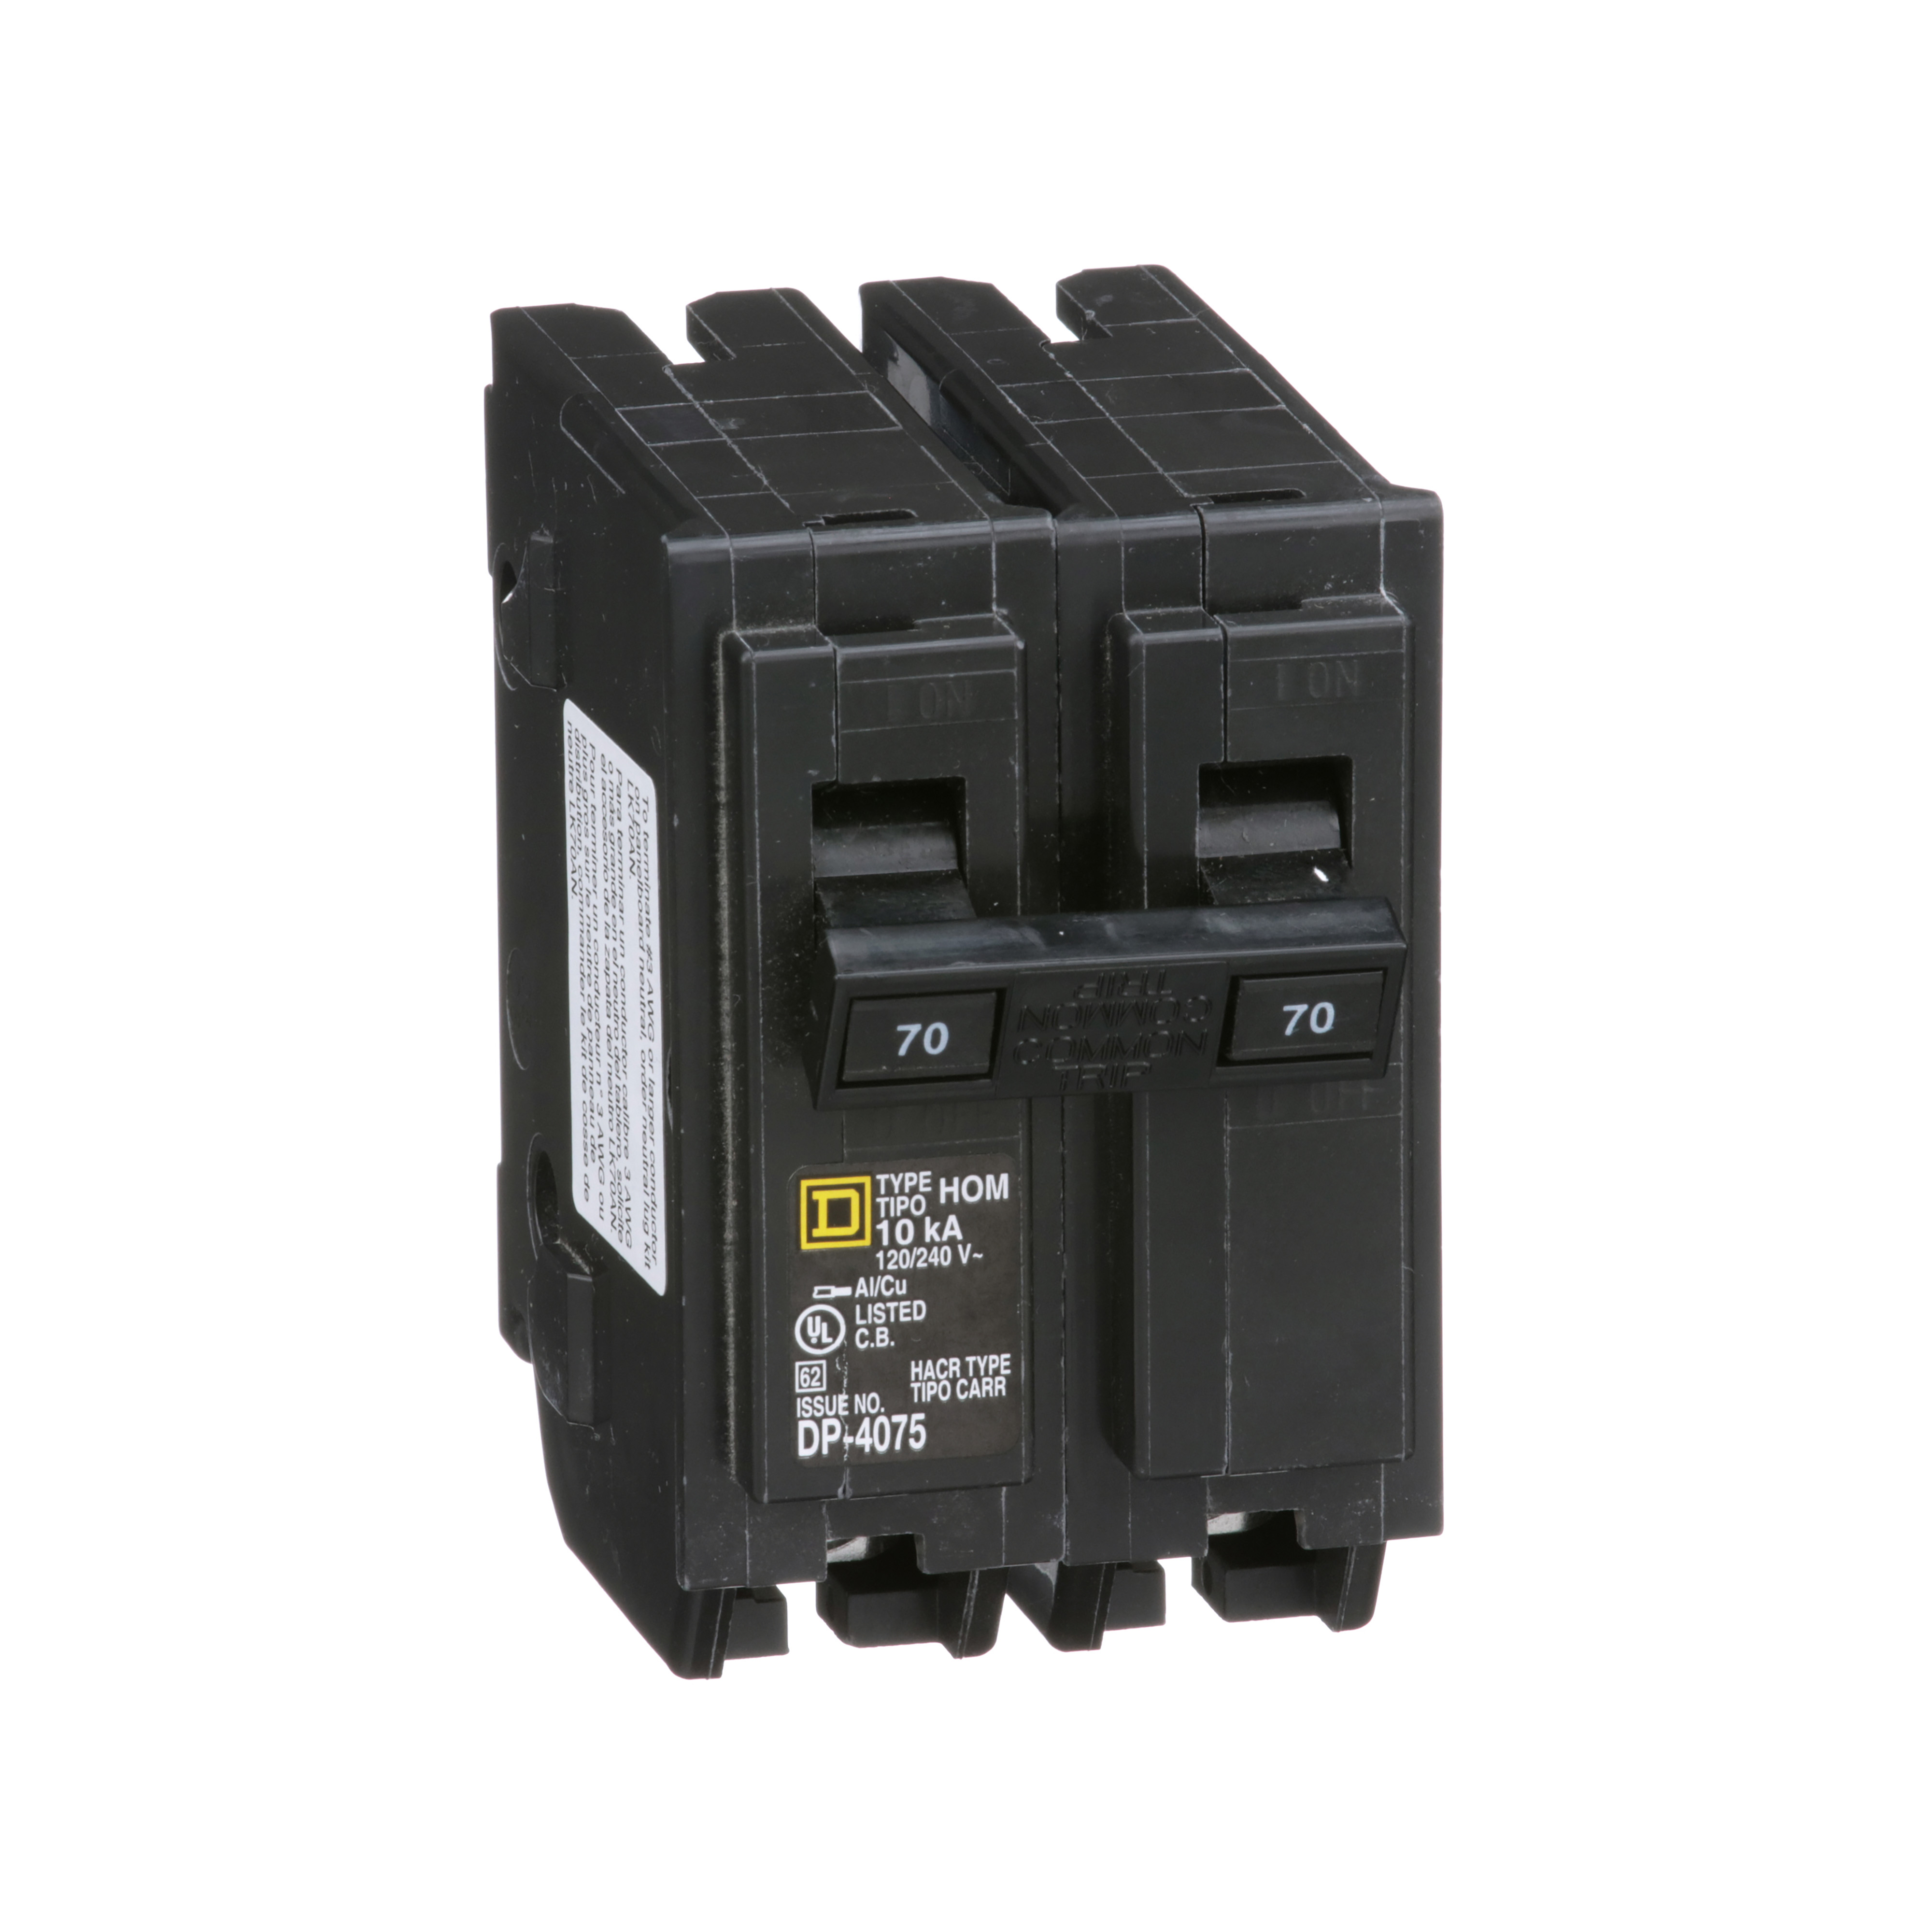 Mini circuit breaker, Homeline, 70A, 2 pole, 120/240VAC, 10kA AIR, standard type, plug in, UL